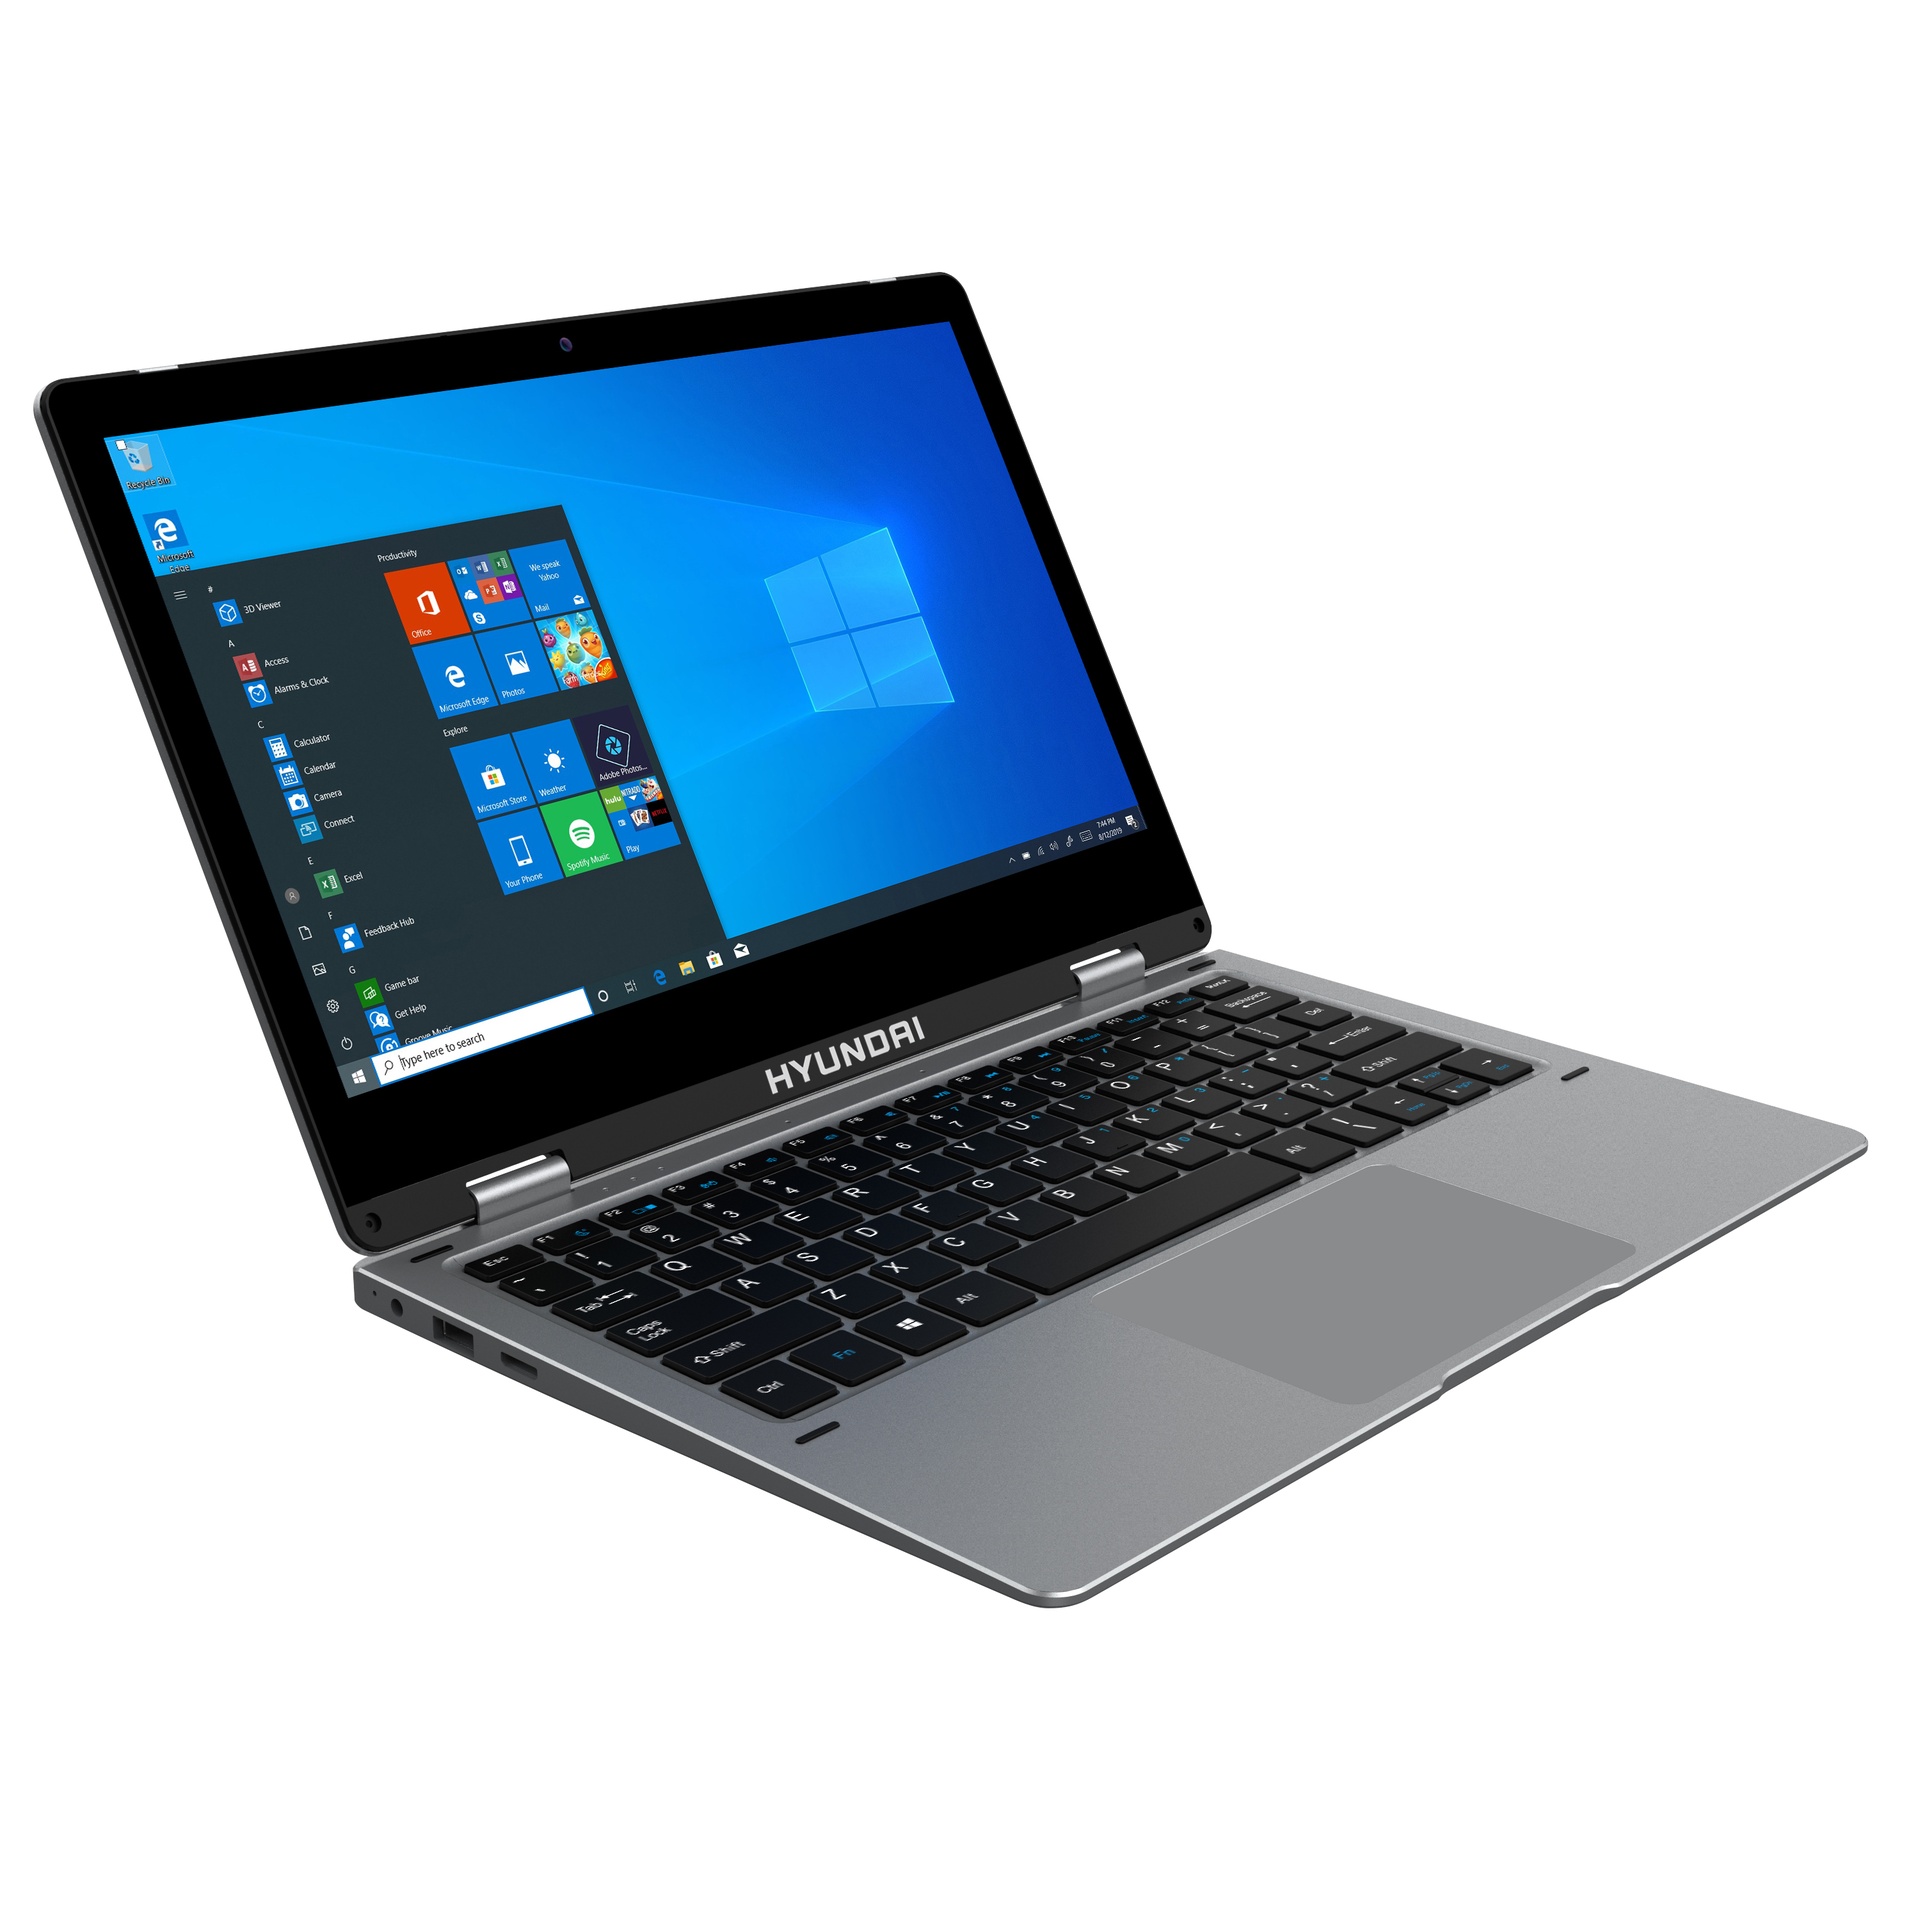 Hyundai HyFlip 11.6" Celeron Laptop, 4GB RAM, 64GB Storage, Windows 10 Pro, WiFi, Silver HTLF11INC4Z1ES UPC 810033035562 - HYUNDAI